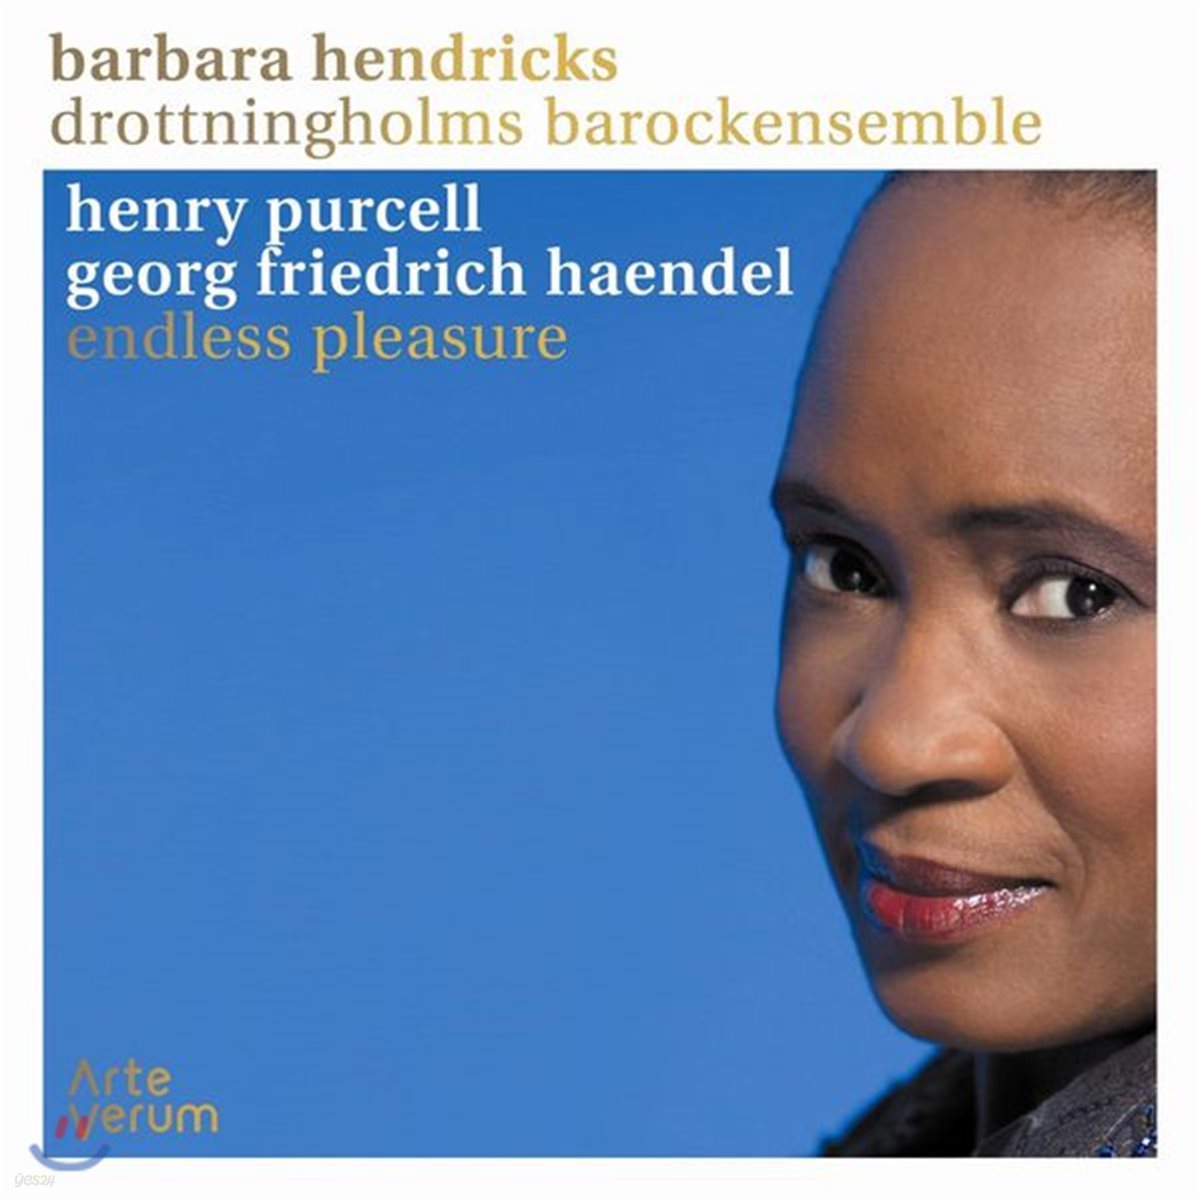 Barbara Hendricks 퍼셀과 헨델 아리아 - 바바라 헨드릭스 (Purcell / Haendel: Endless Pleasure)